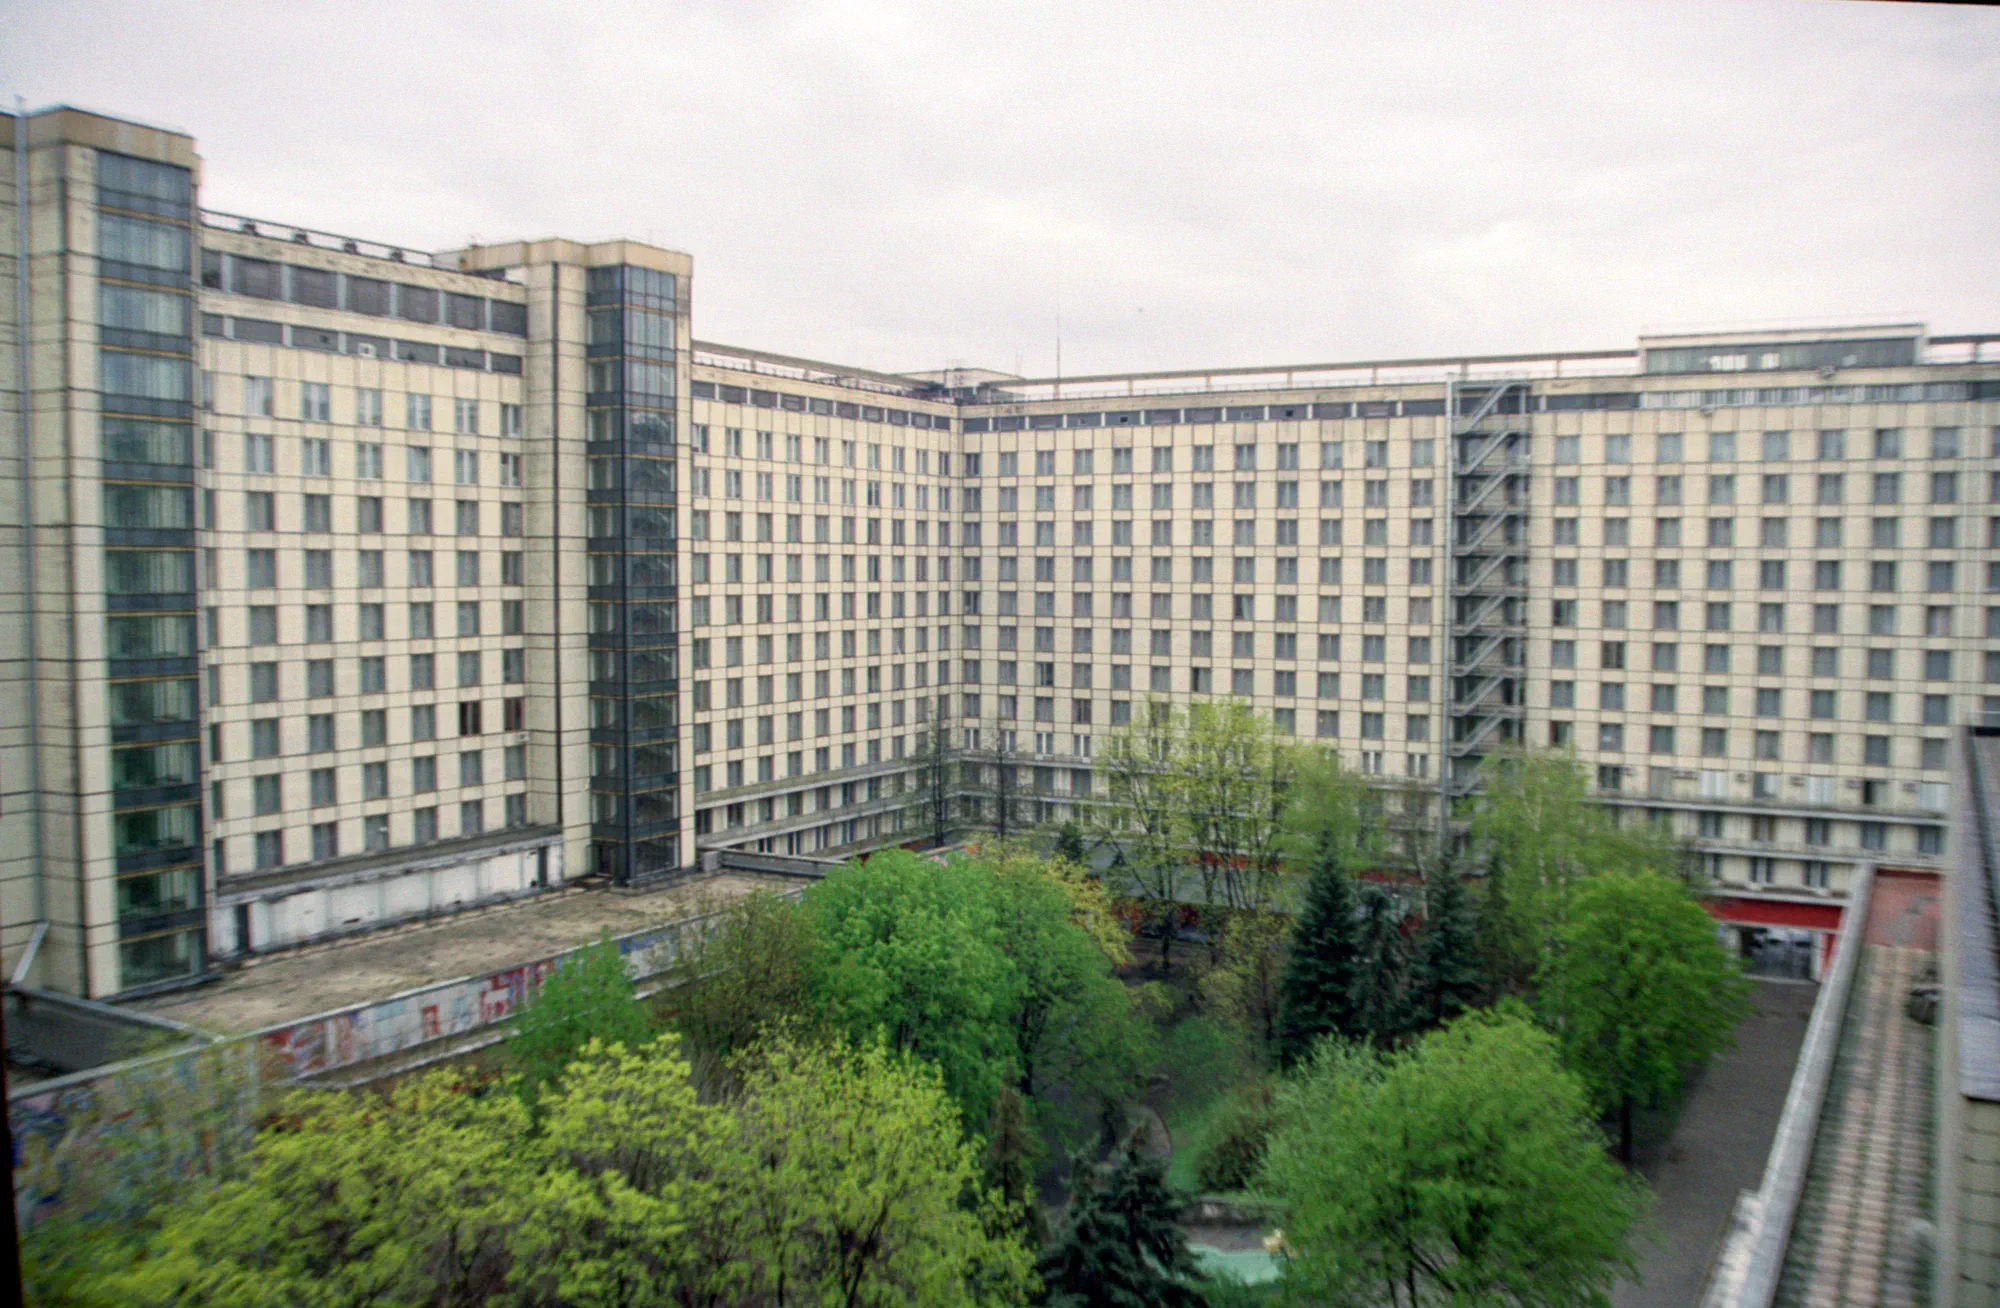 Courtyard of the Rossiya Hotel